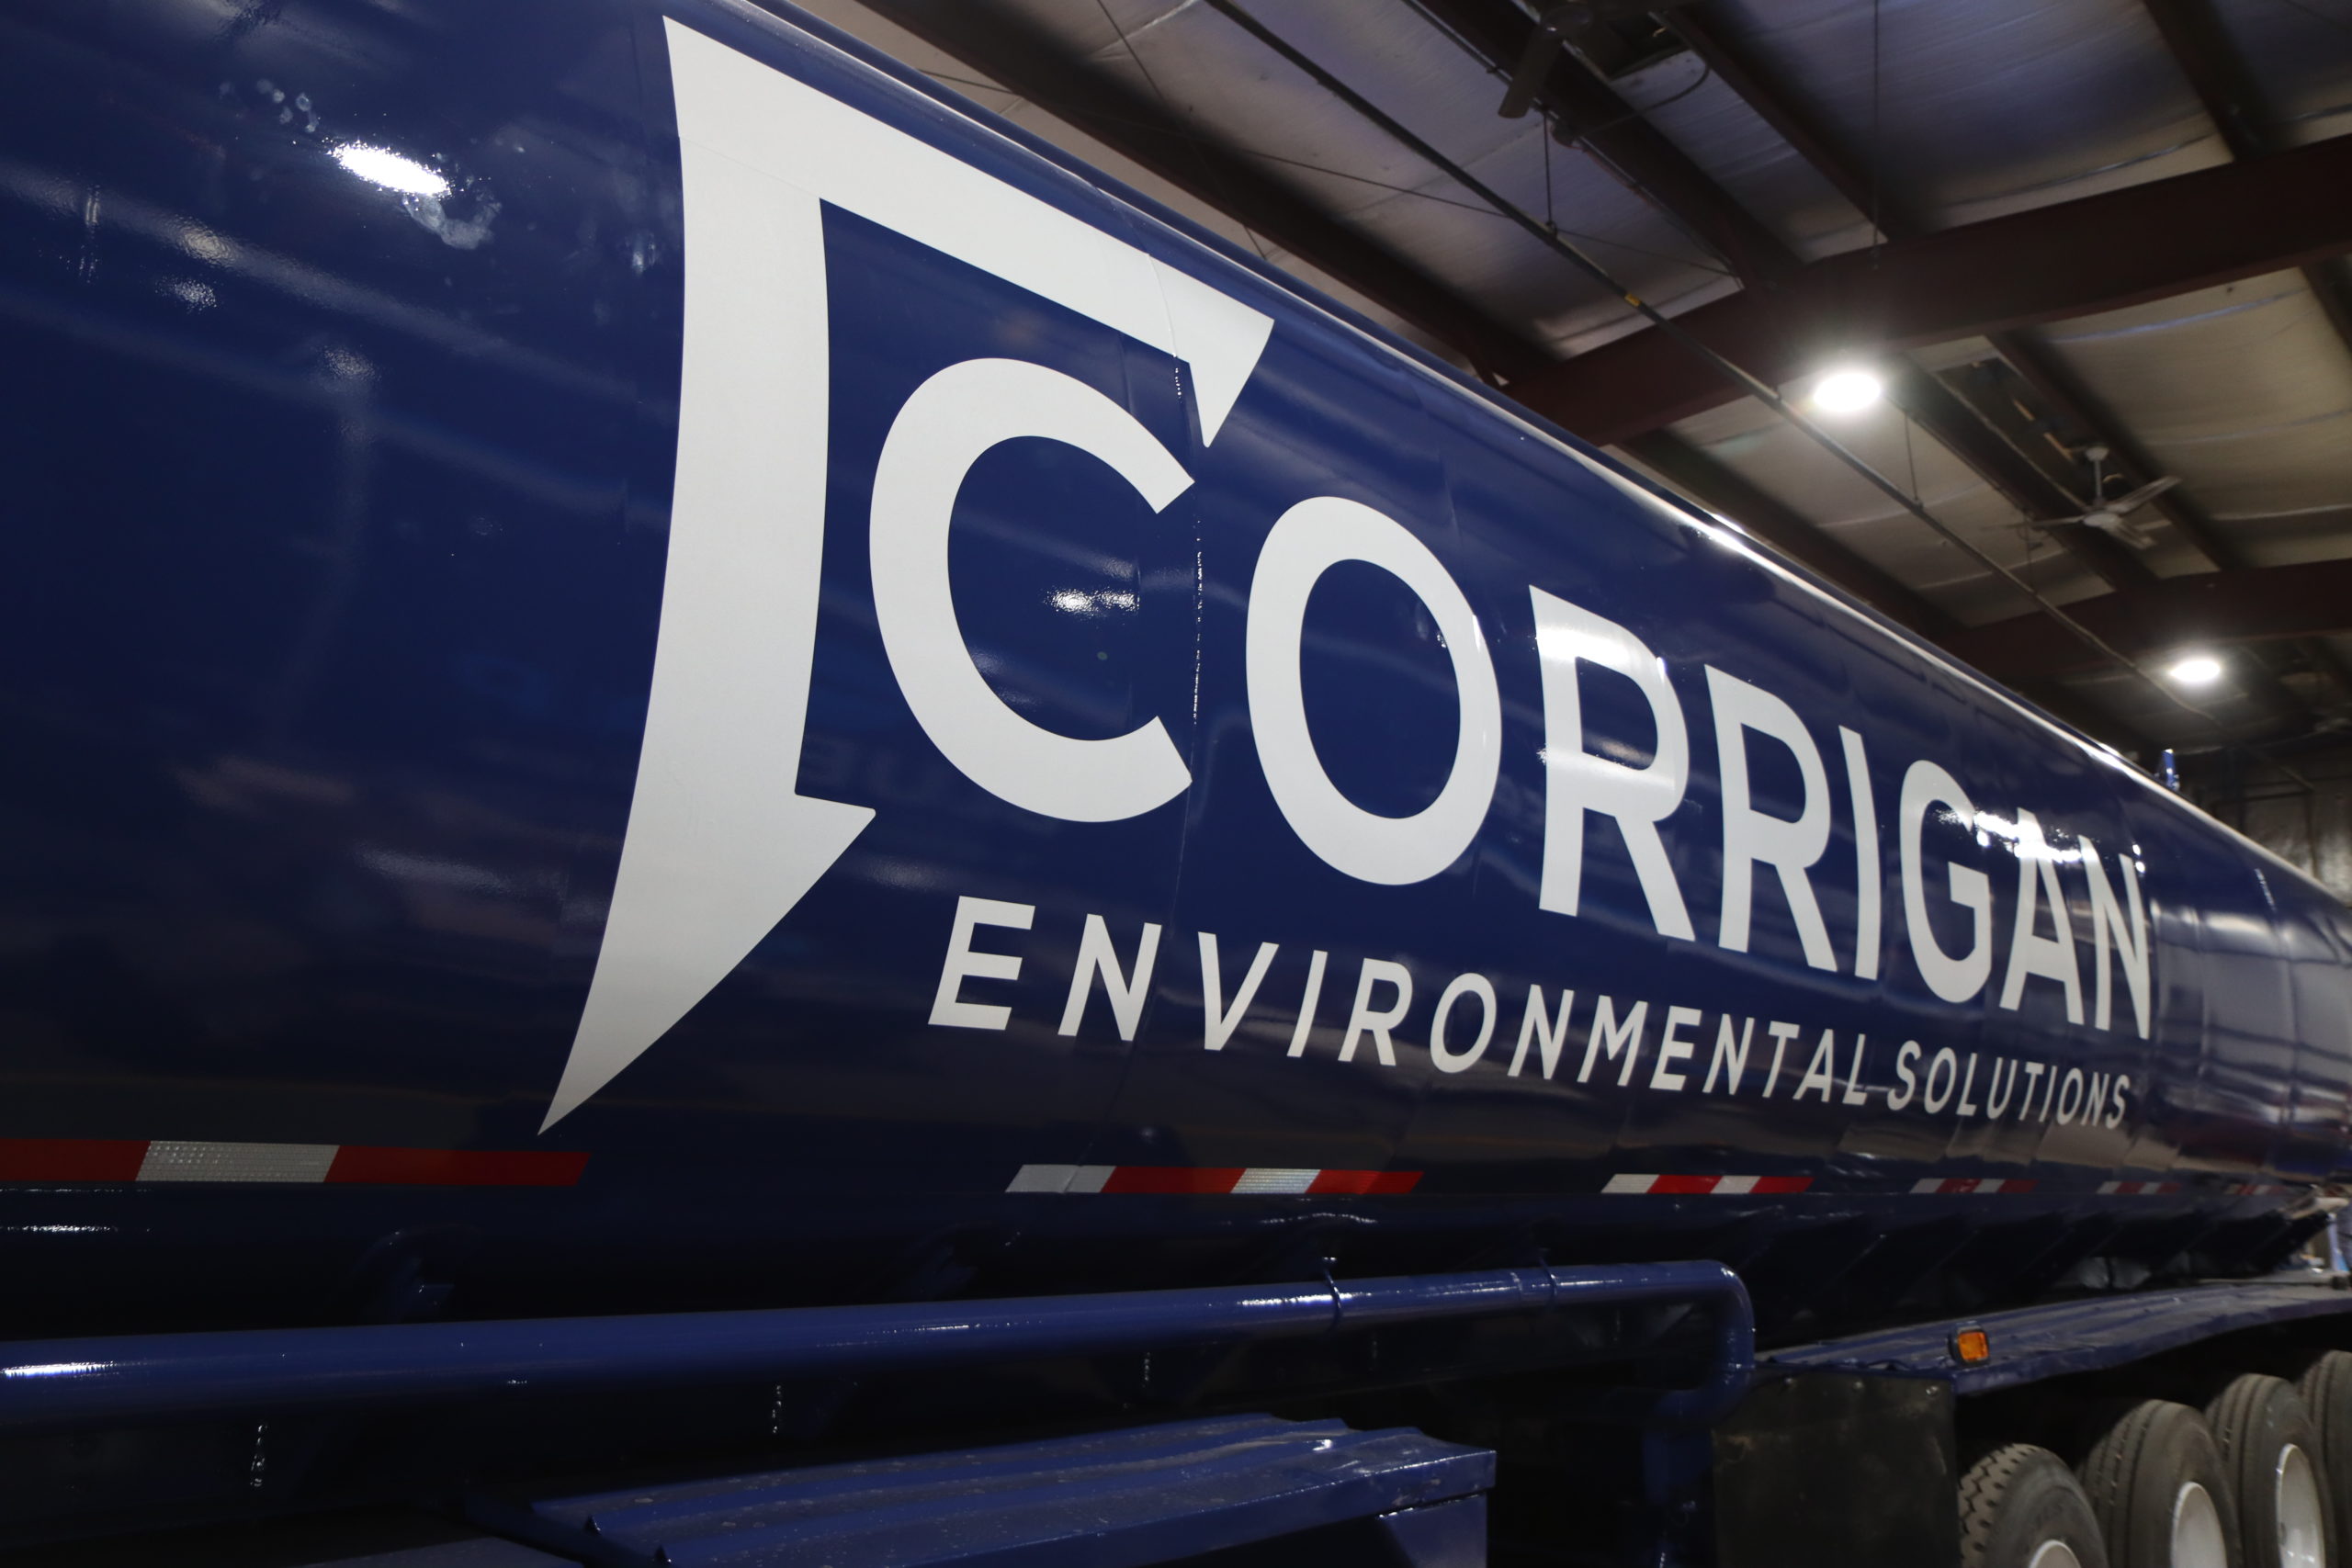 Blue Corrigan Environmental Truck